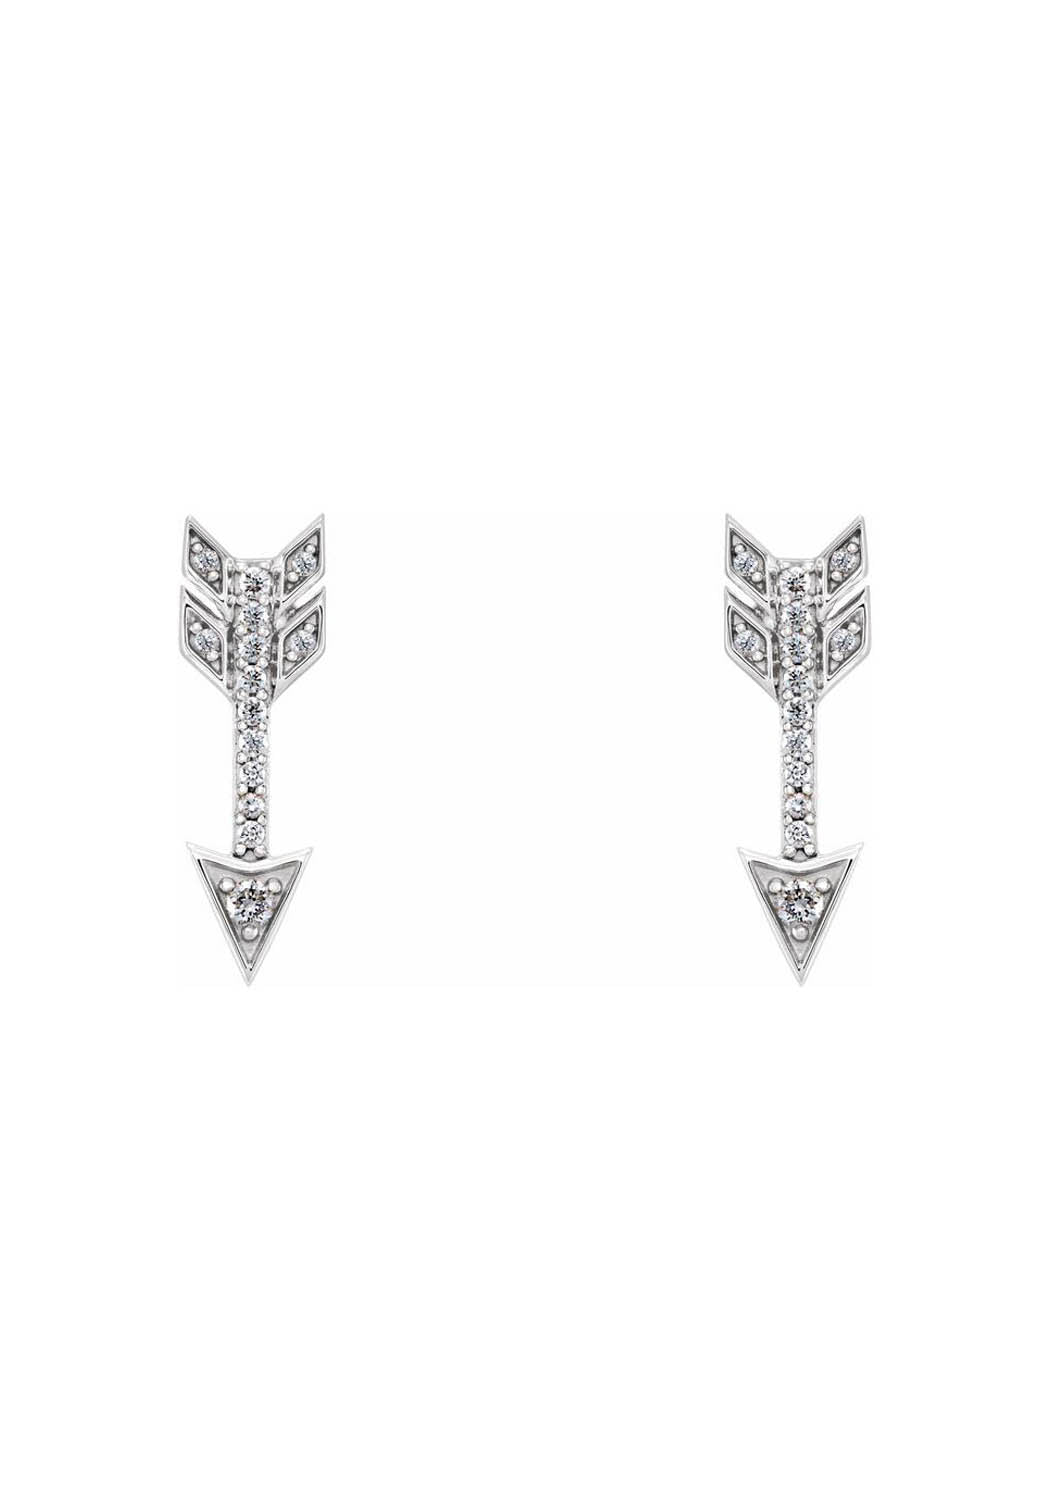 14K White Gold Diamond Arrow Stud Earrings | OsterJewelers.com